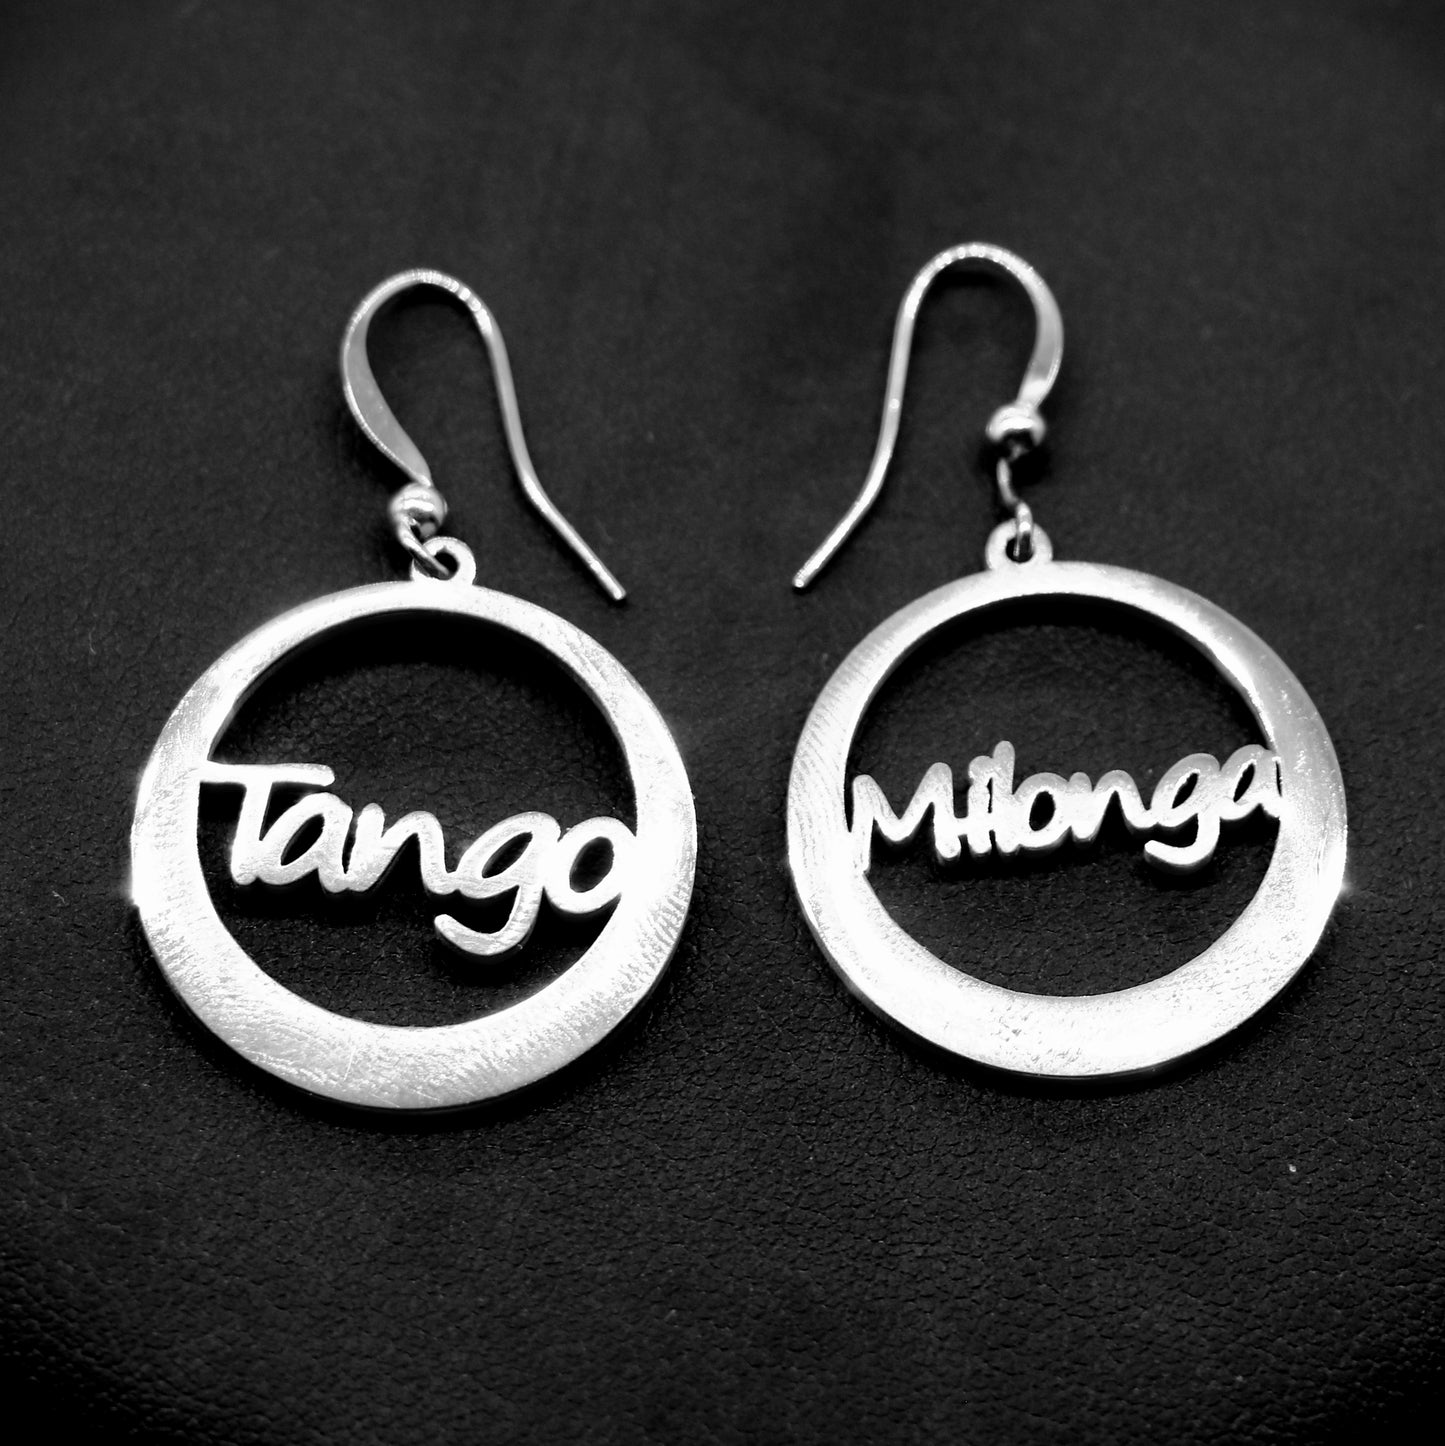 Tango and Milonga hoop earrings - silver